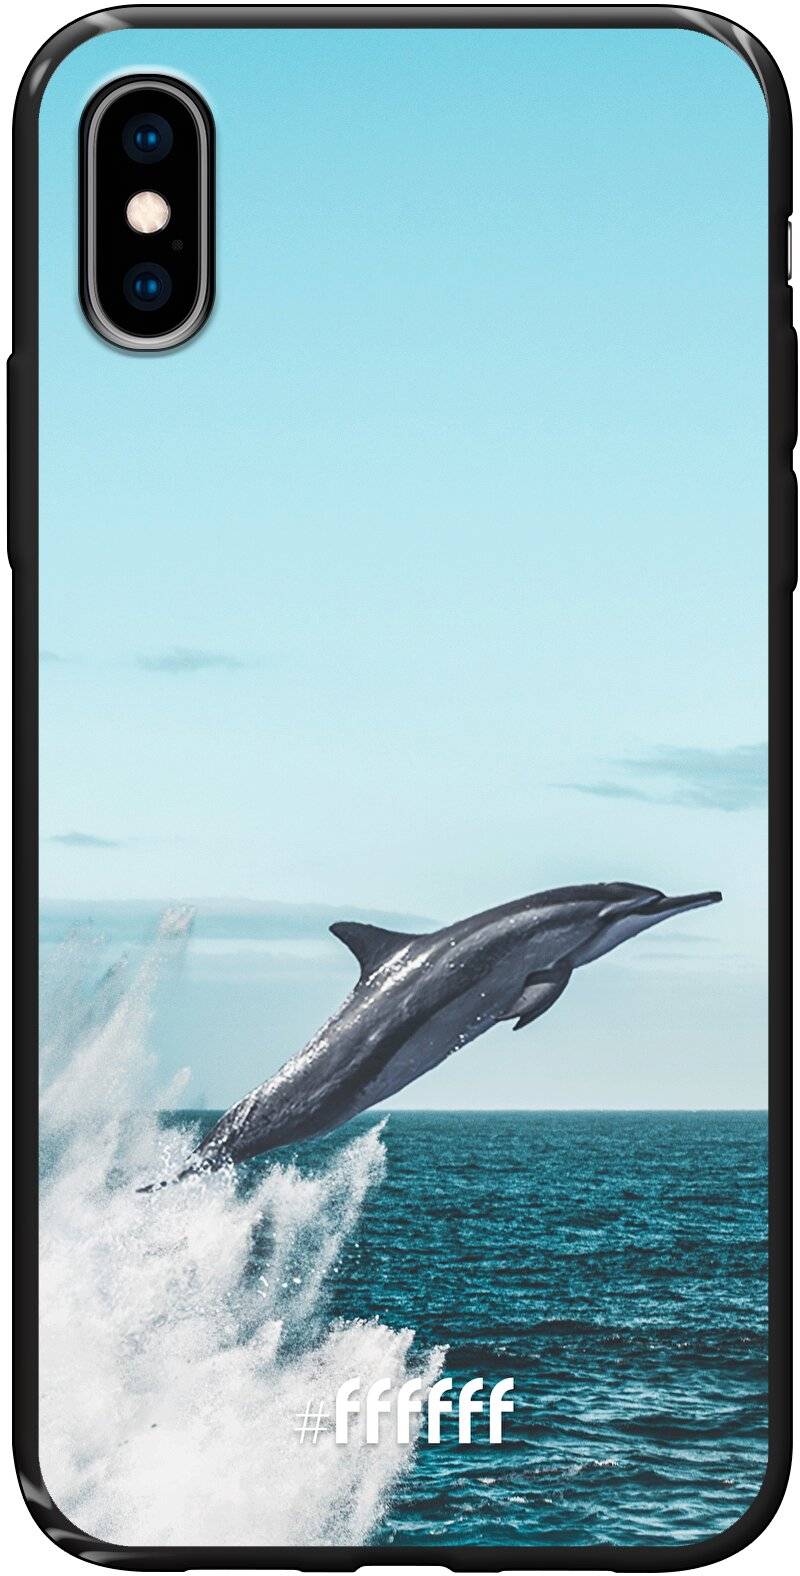 Dolphin iPhone X